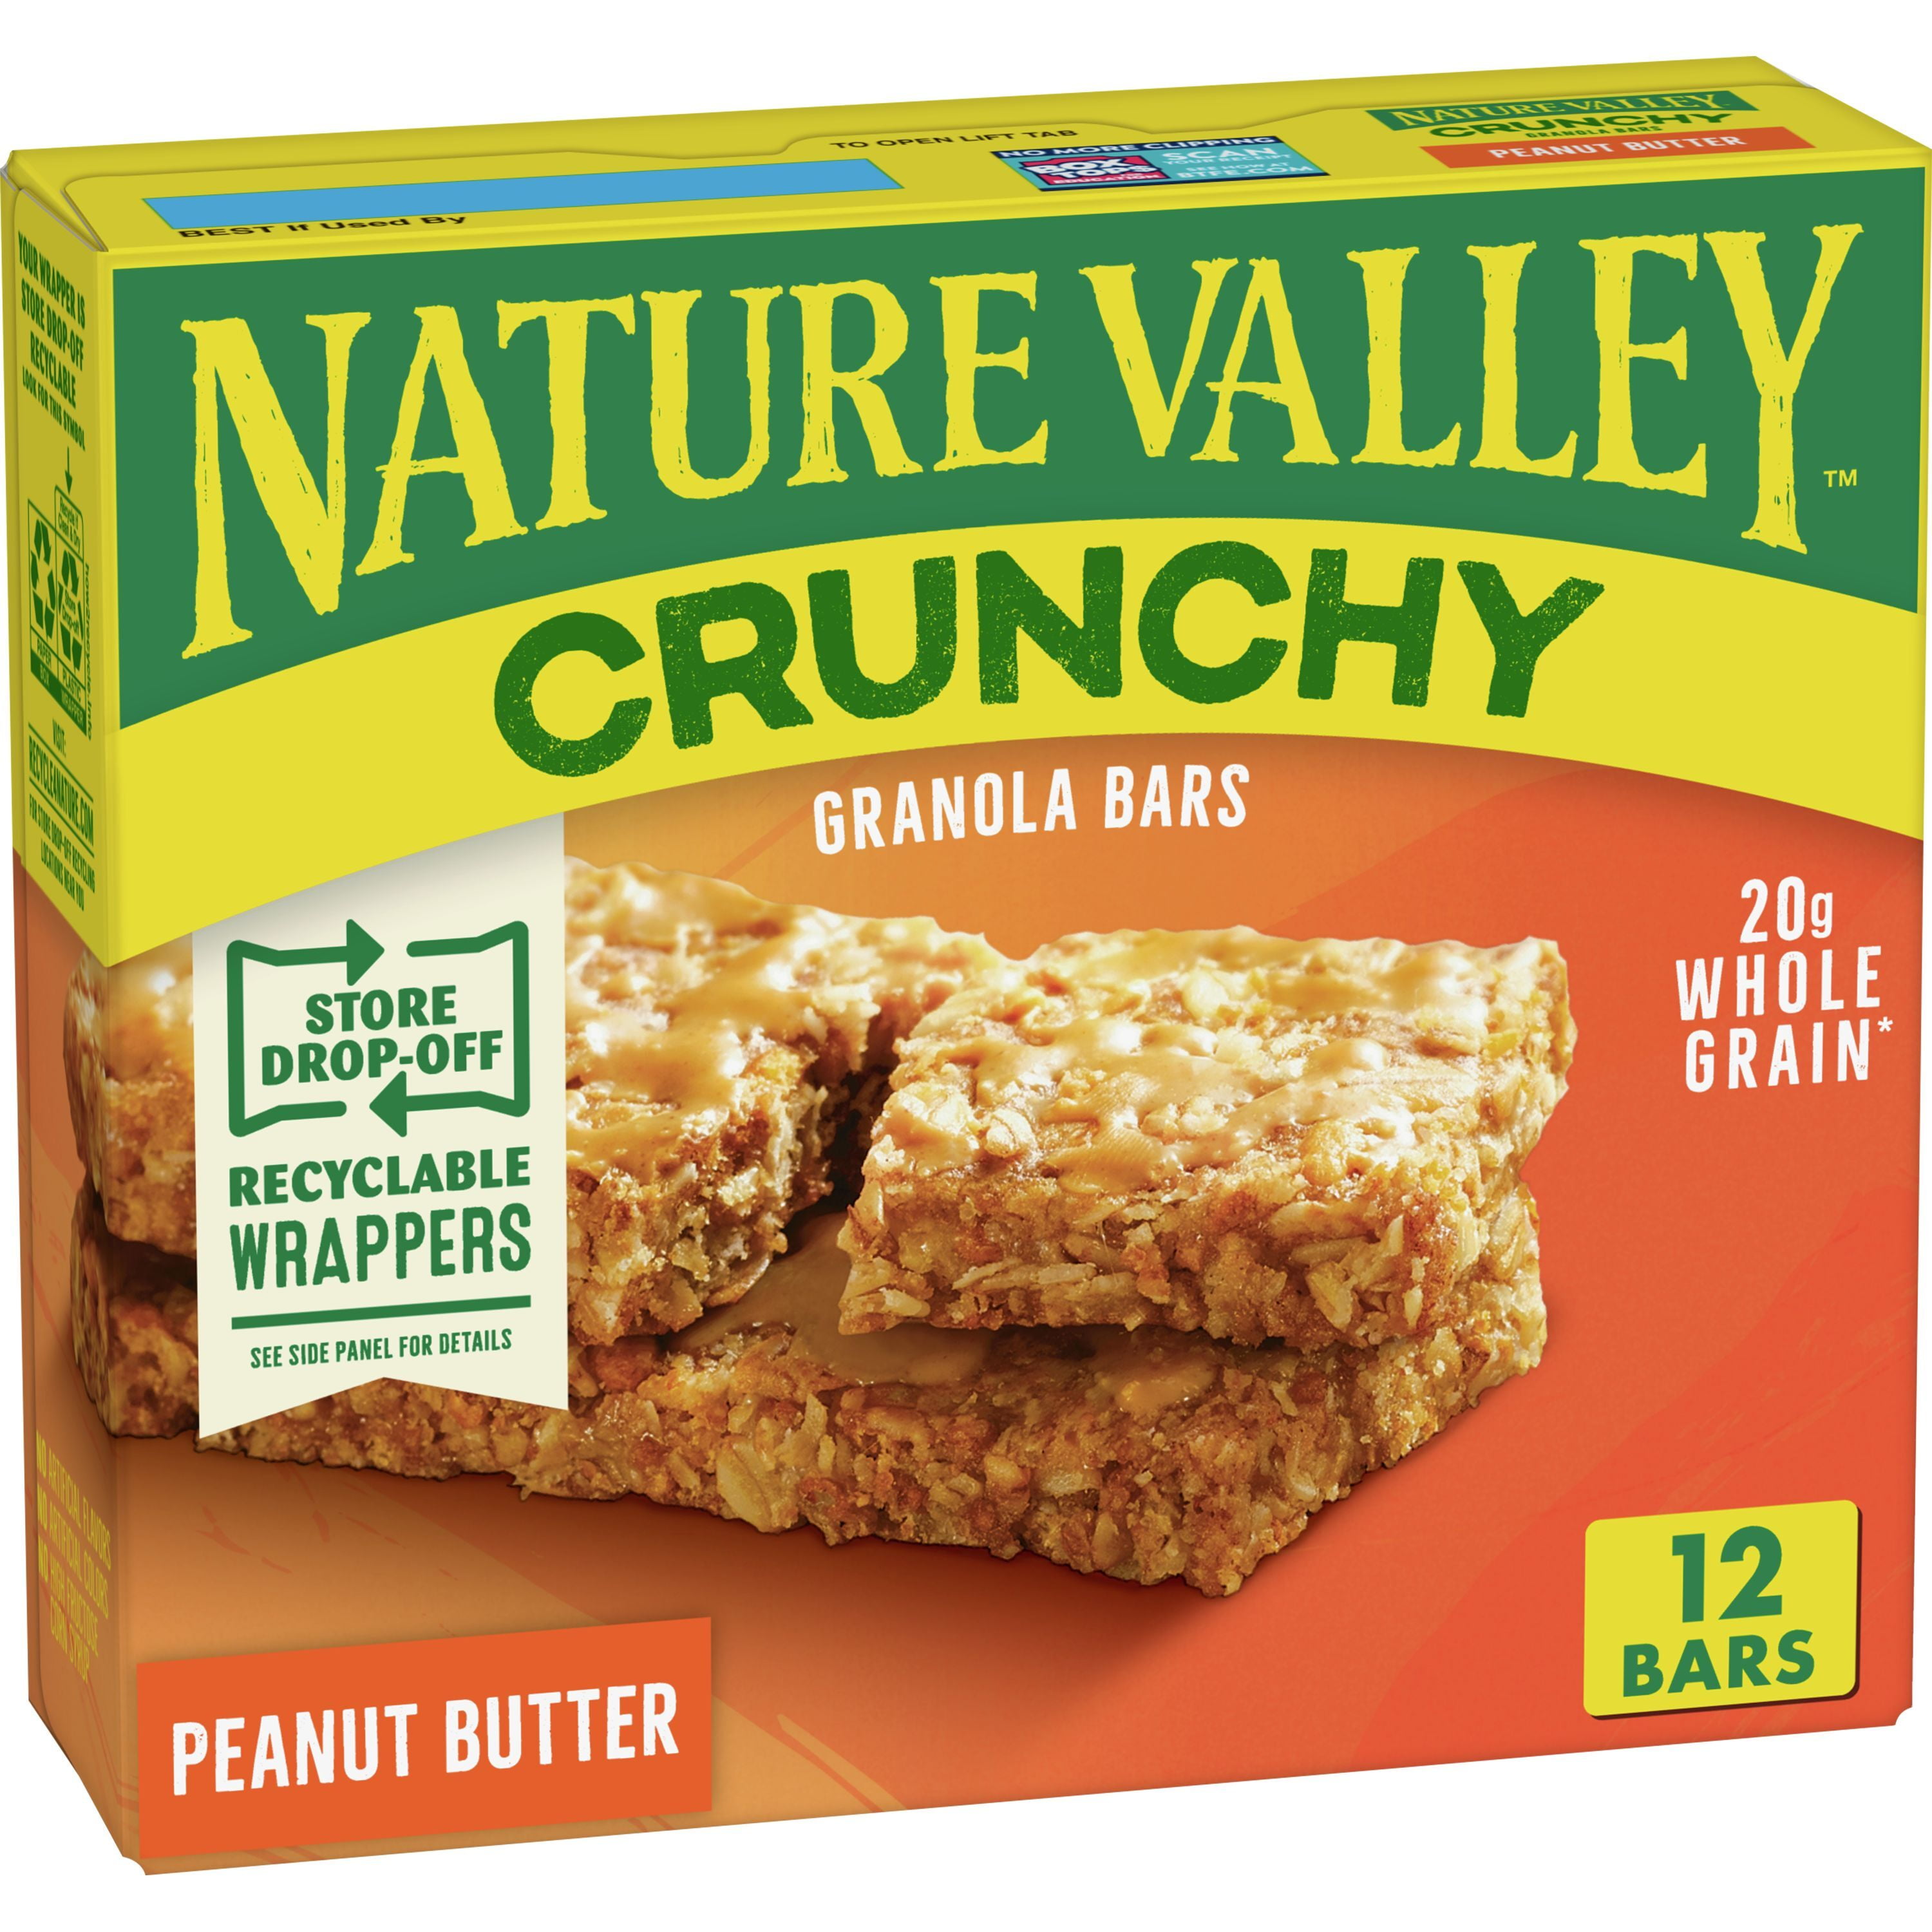 Nature Valley Crunchy Granola Bars, Peanut Butter, 8.94 oz, 6 ct, 12 bars